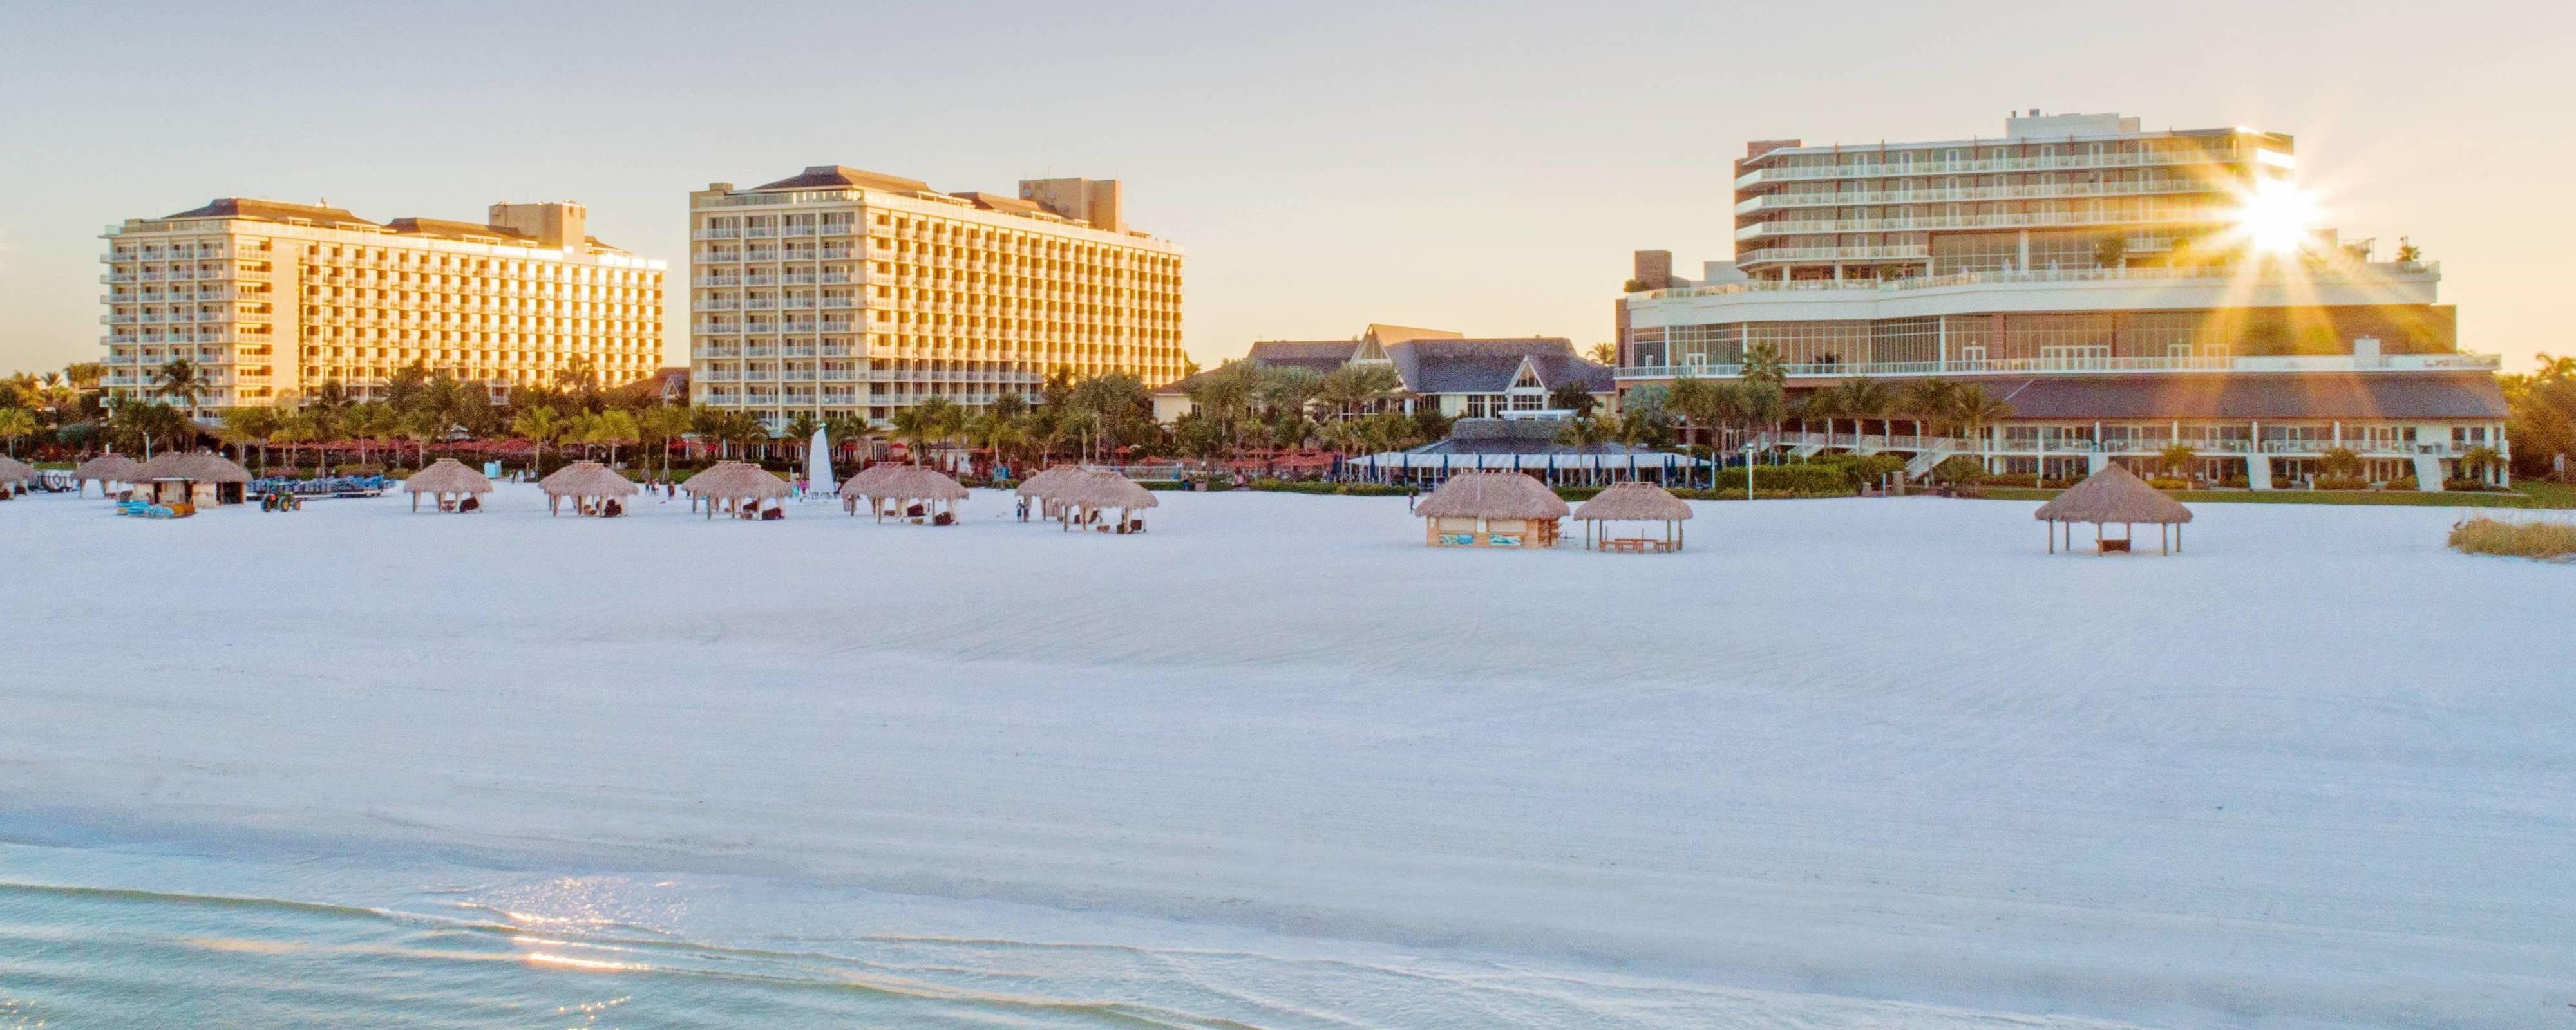 Luxury Resort in Florida | JW Marriott Marco Island Beach Resort